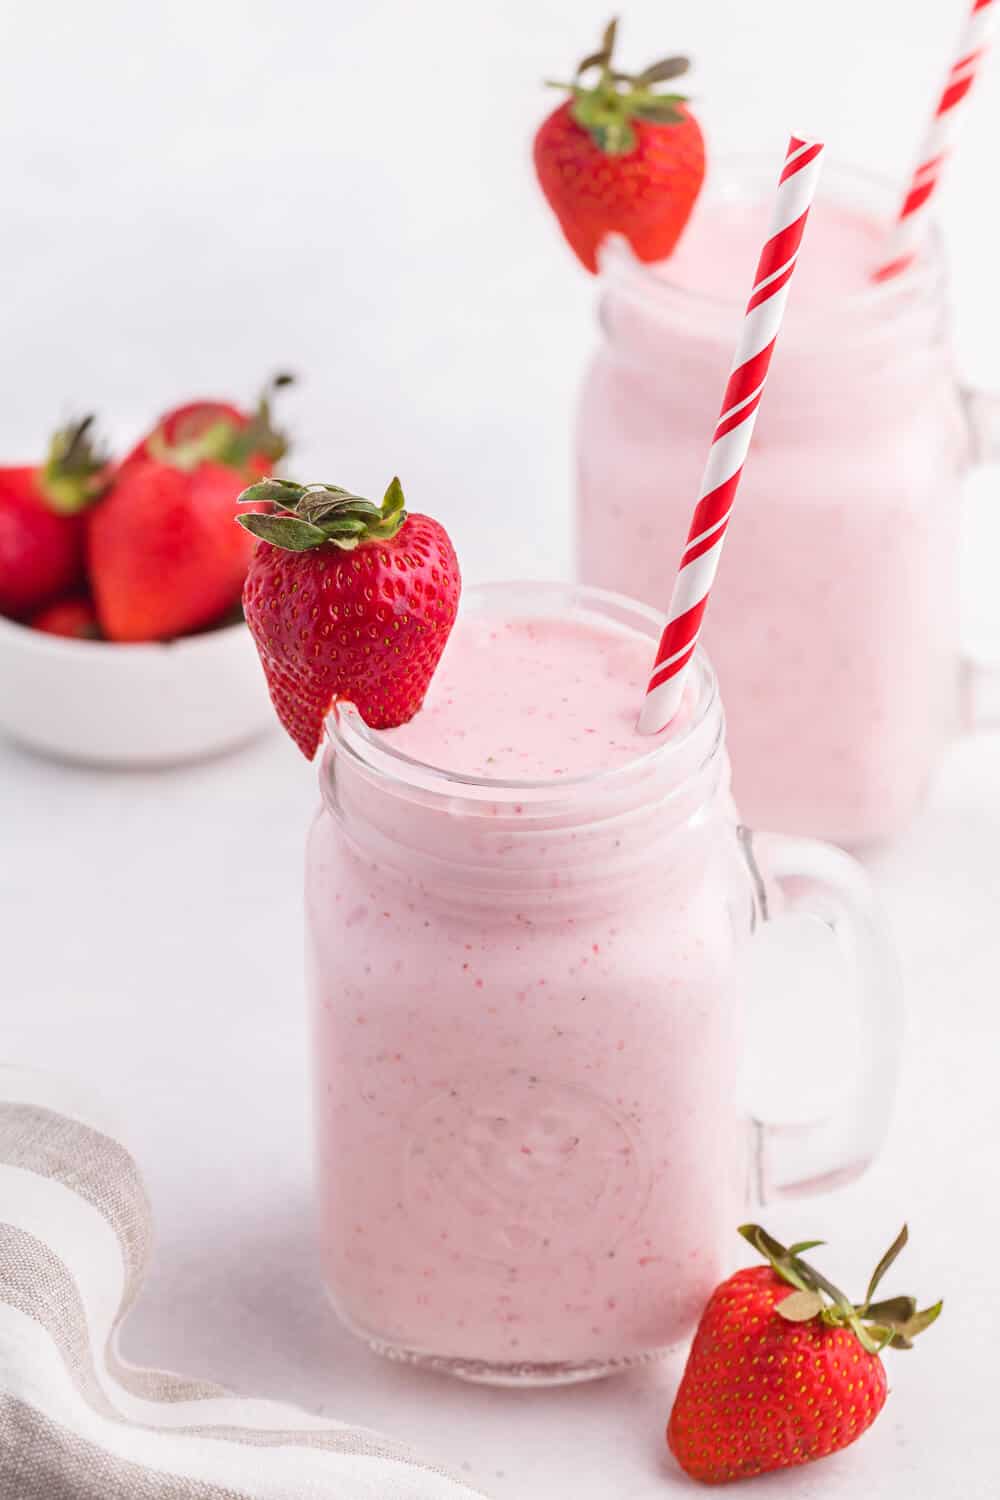 Strawberry vanilla smoothie in a glass mug with a straw and strawberry garnish.